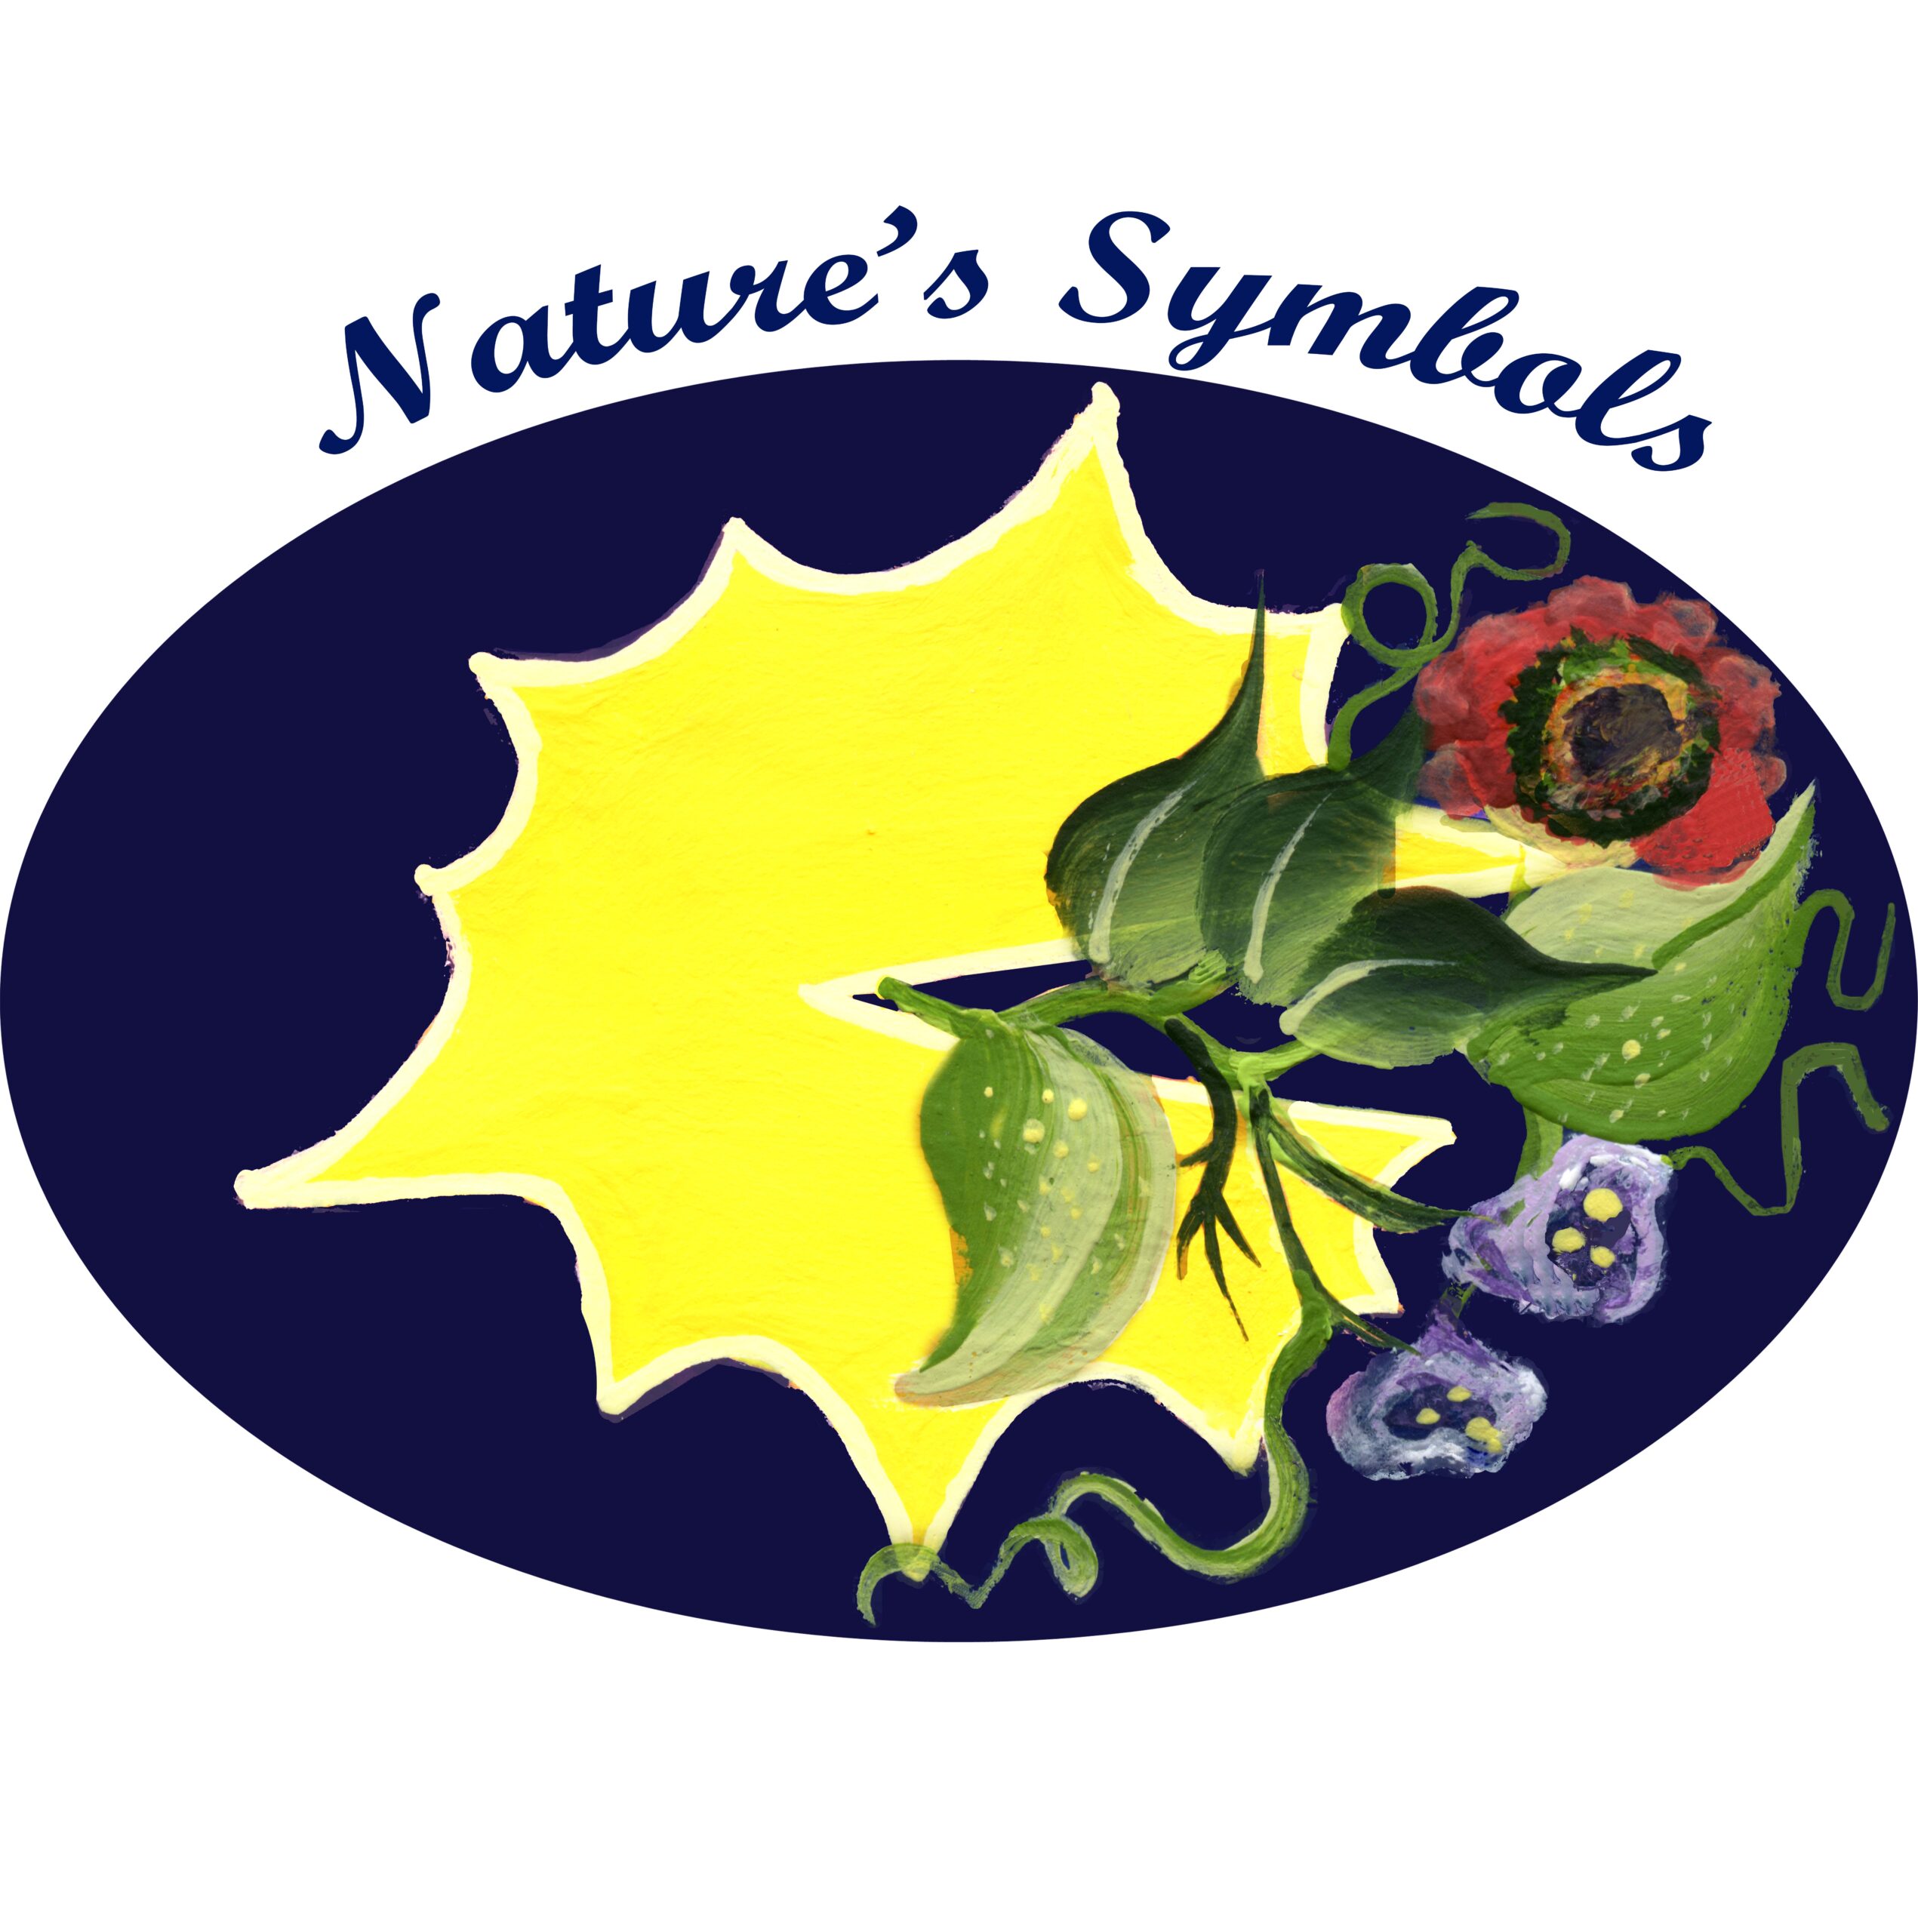 Natures symbols